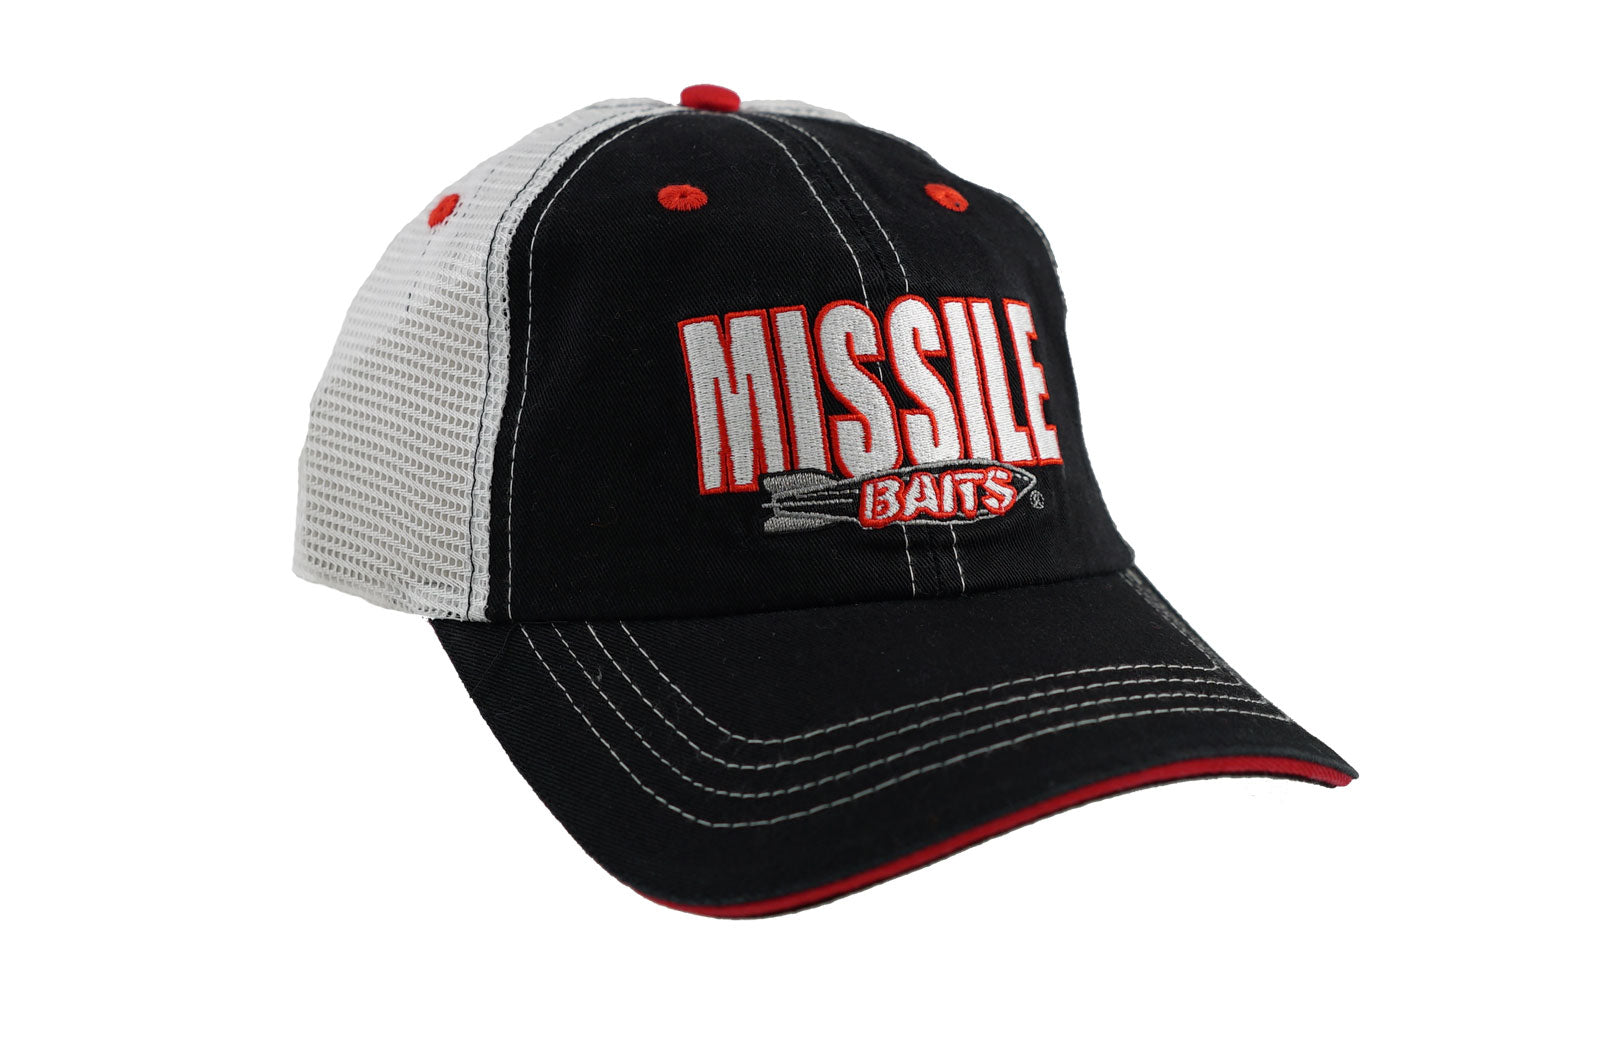 Missile Baits - Trucker Hat